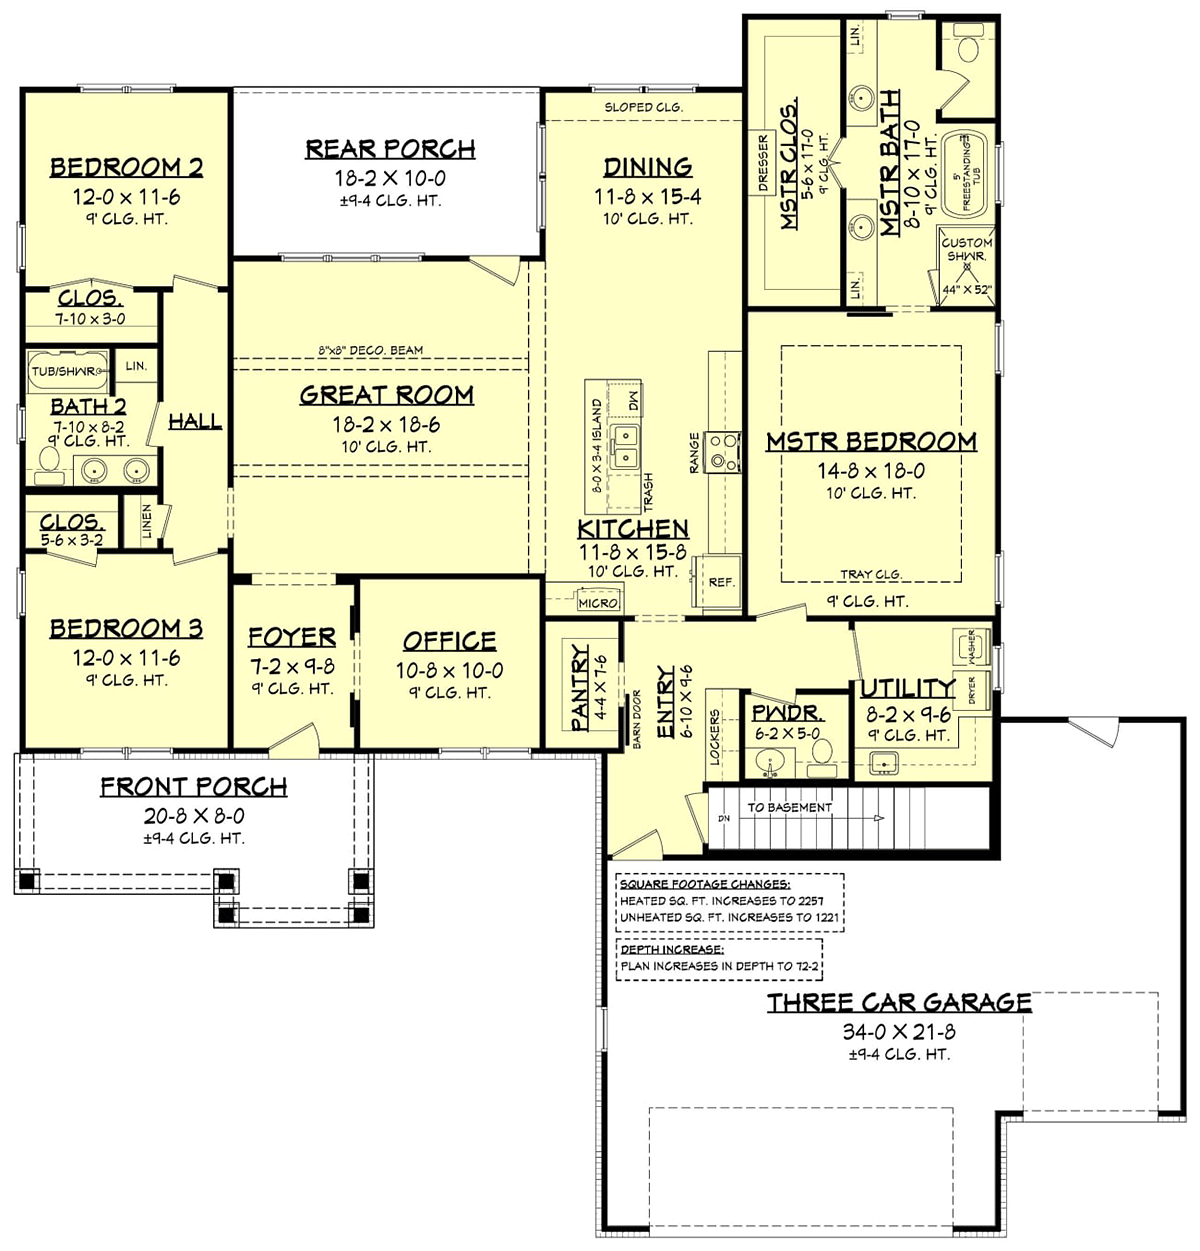 House Plan 56707 Alternate Level One